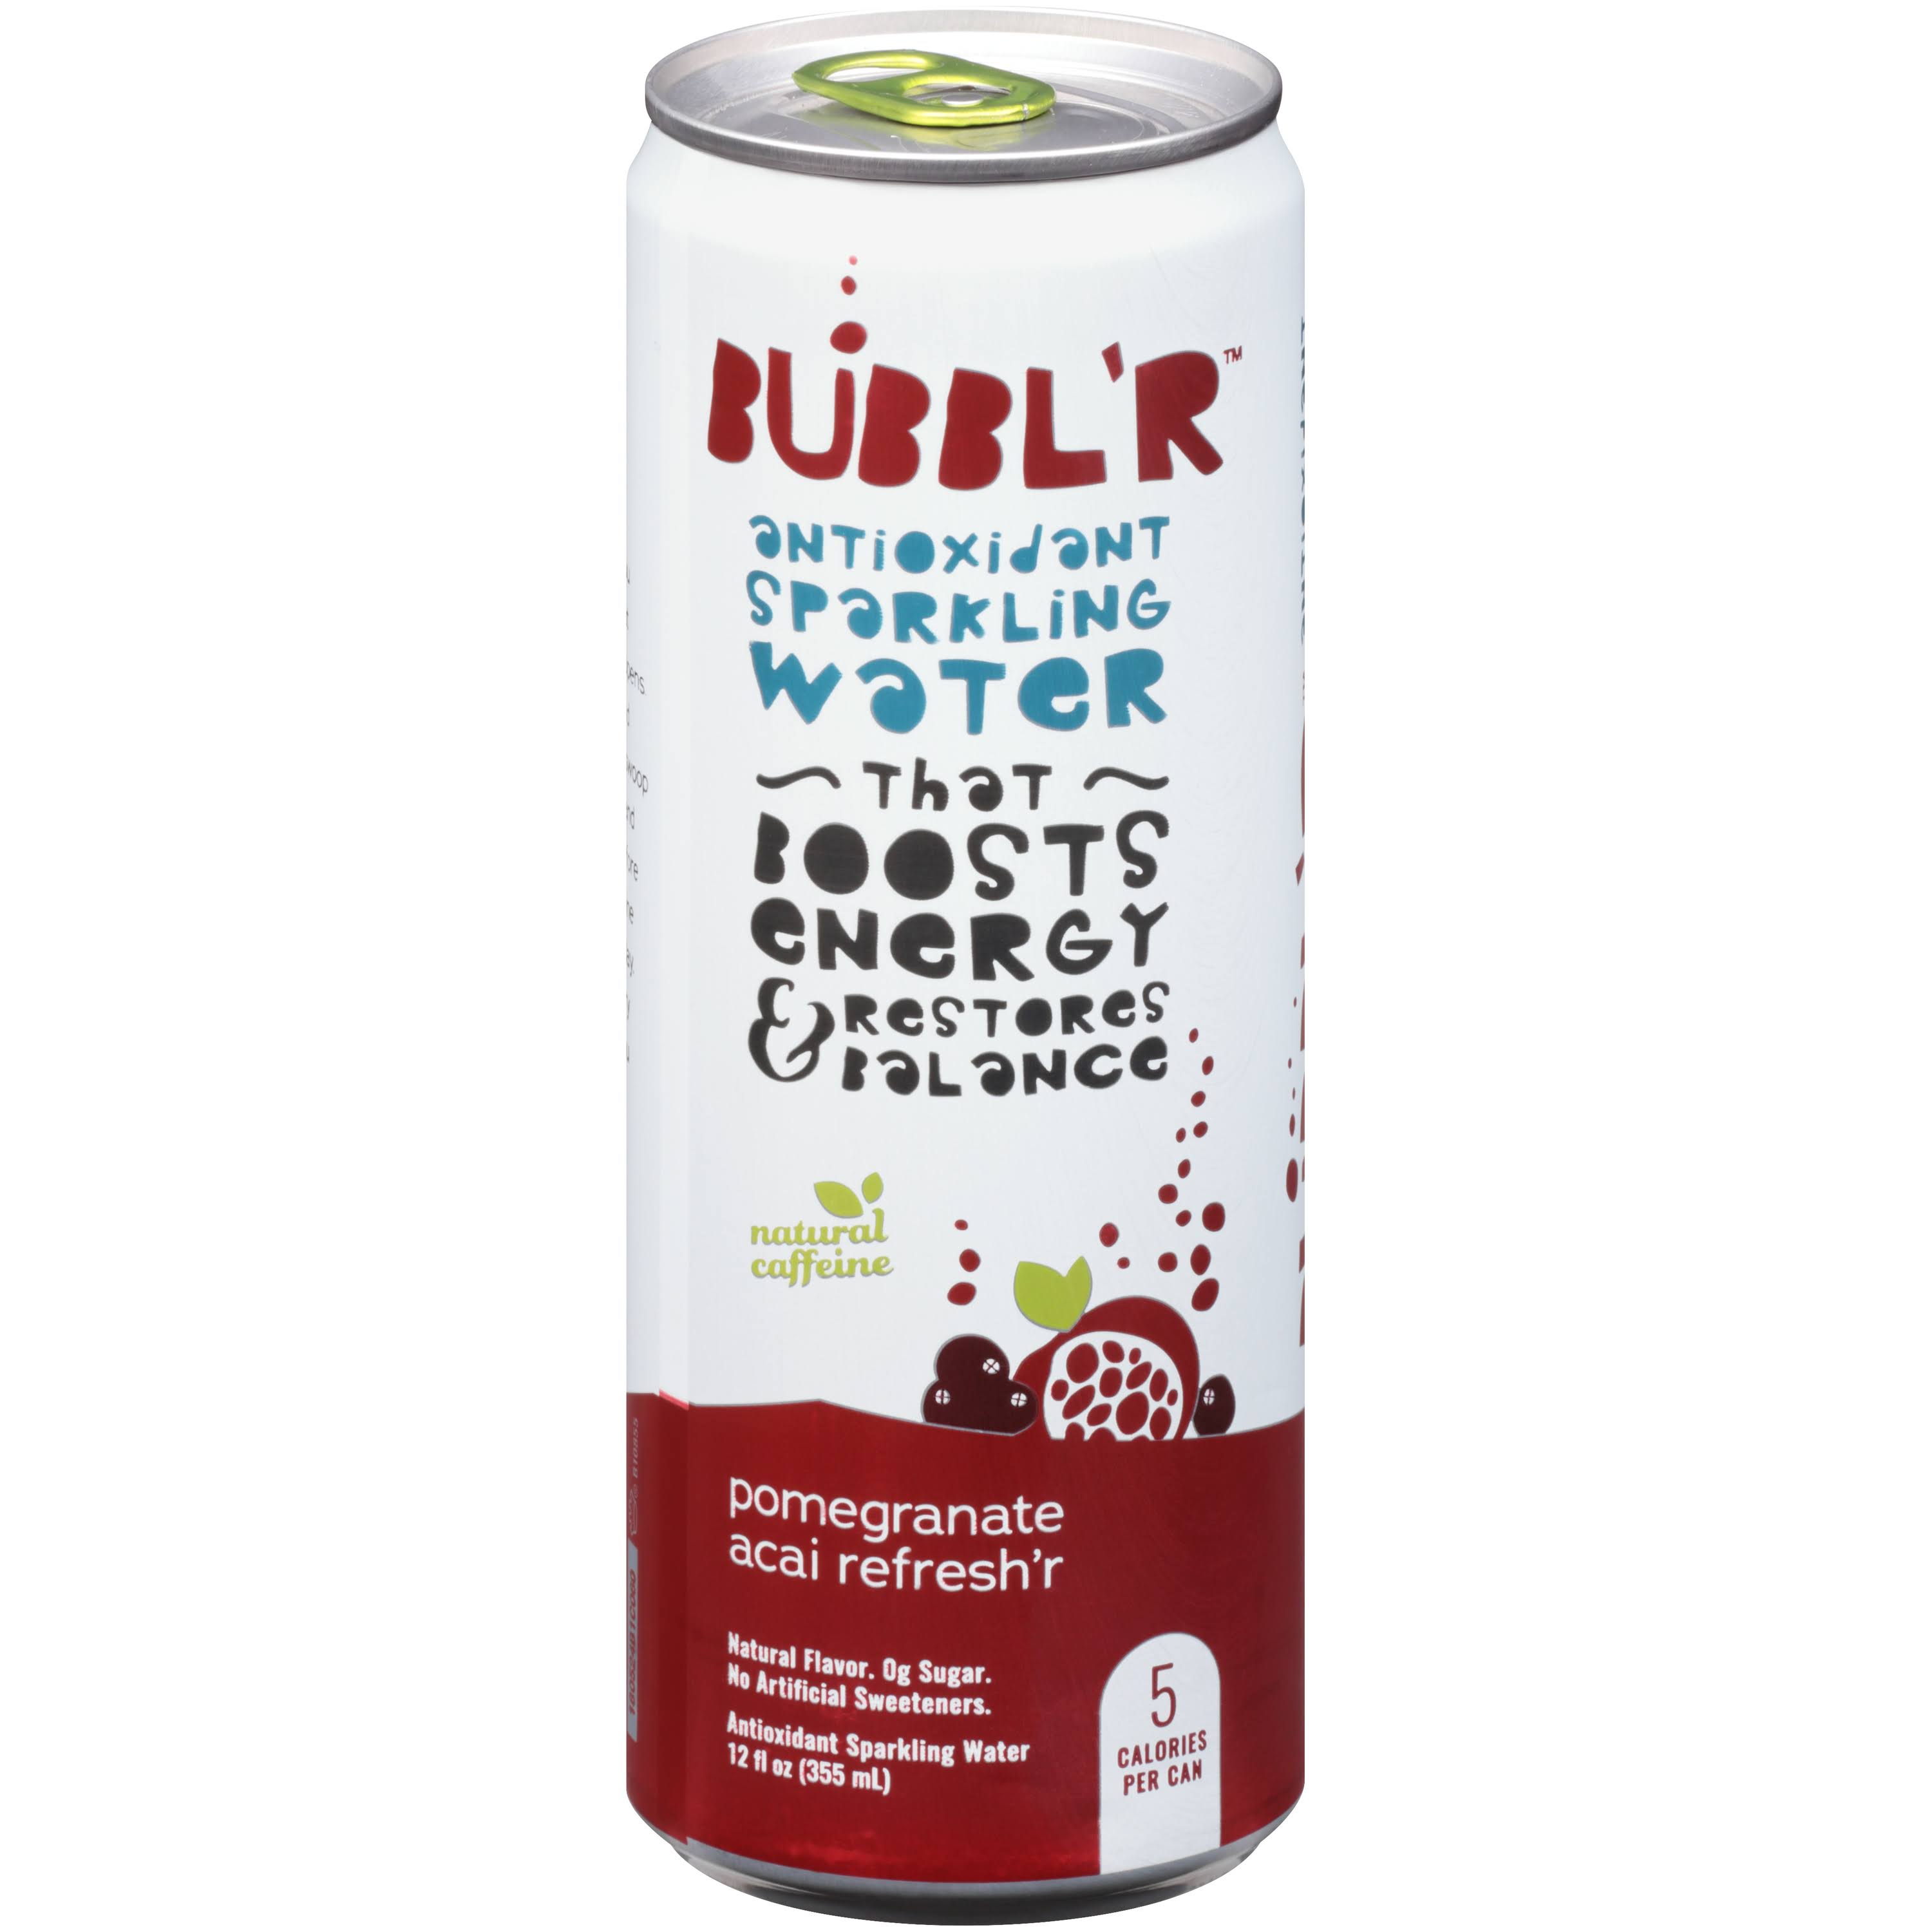 Bubblr Sparkling Water, Antioxidant, Pomegranate Acai Refresh'r - 12 fl oz